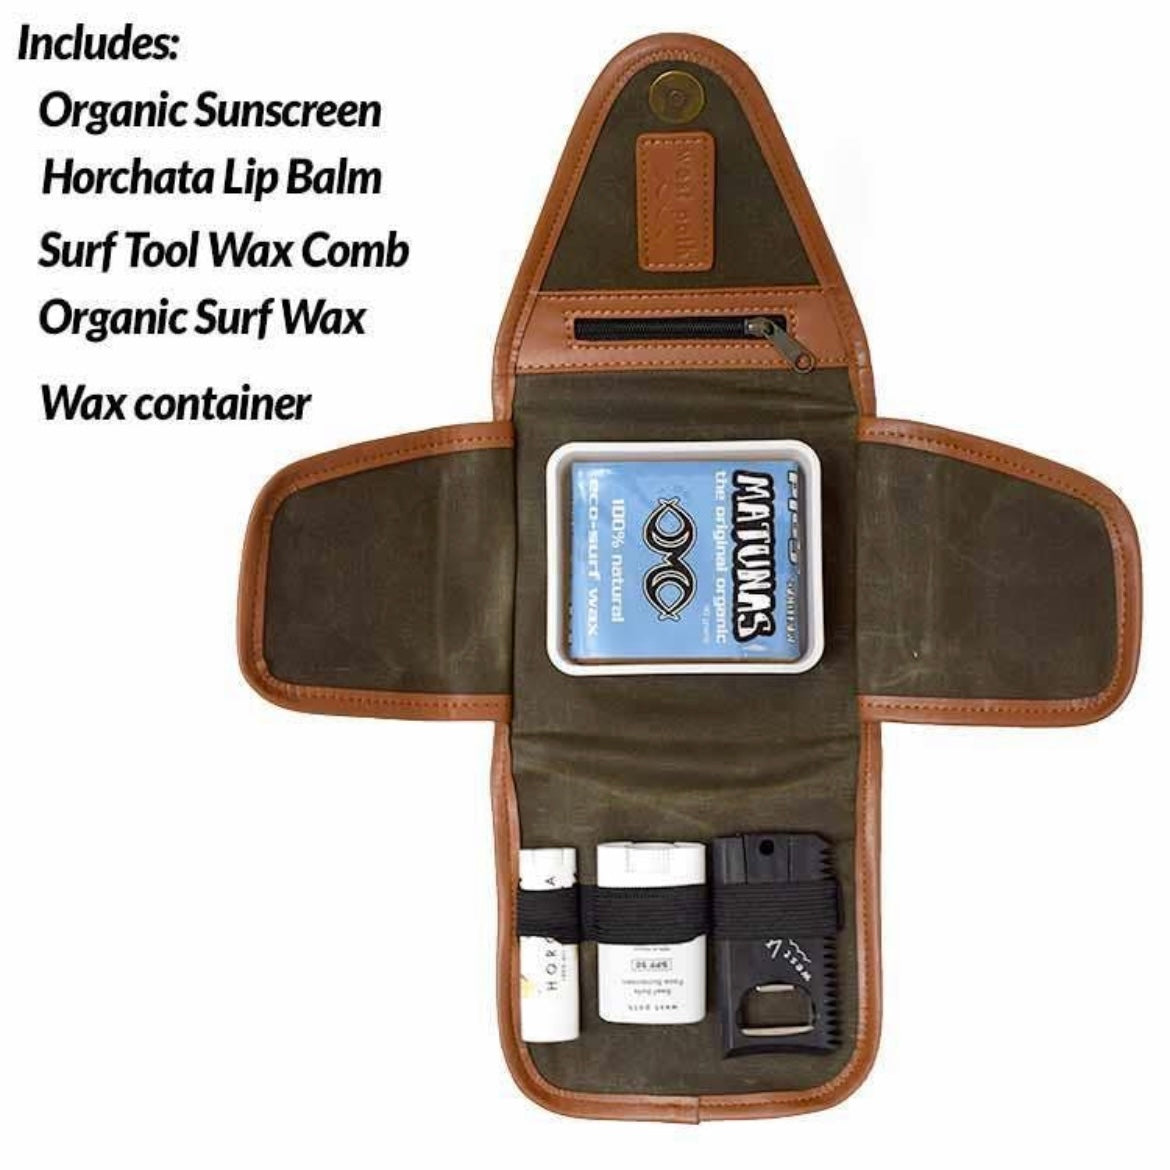 Surf Kit - Travel Clutch, incl. wax, sunscreen, Lip Balm &amp; comb w/fin key